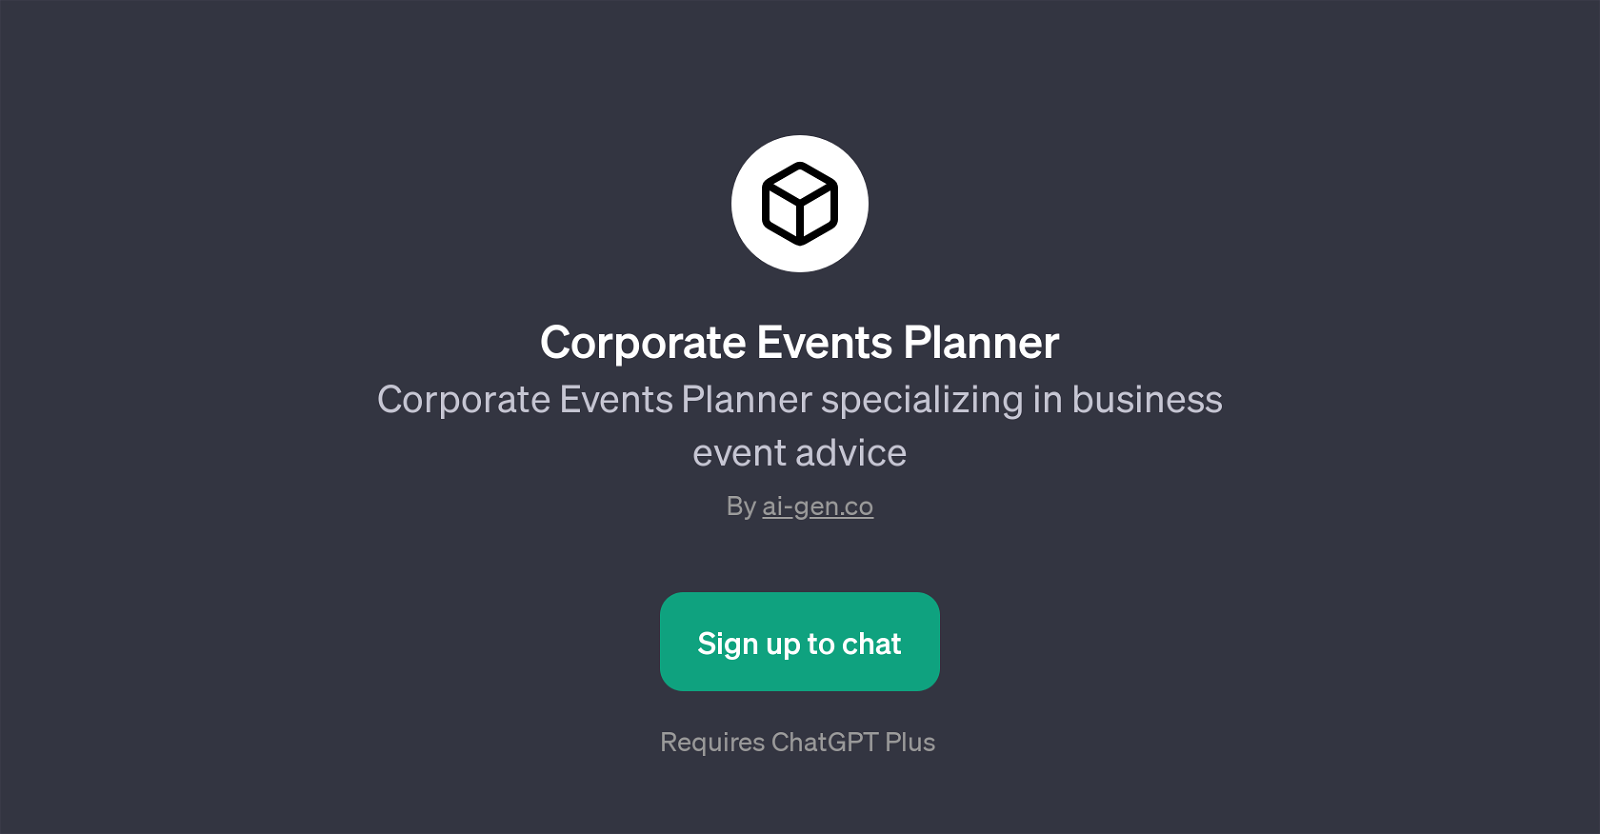 Corporate Events Planner website